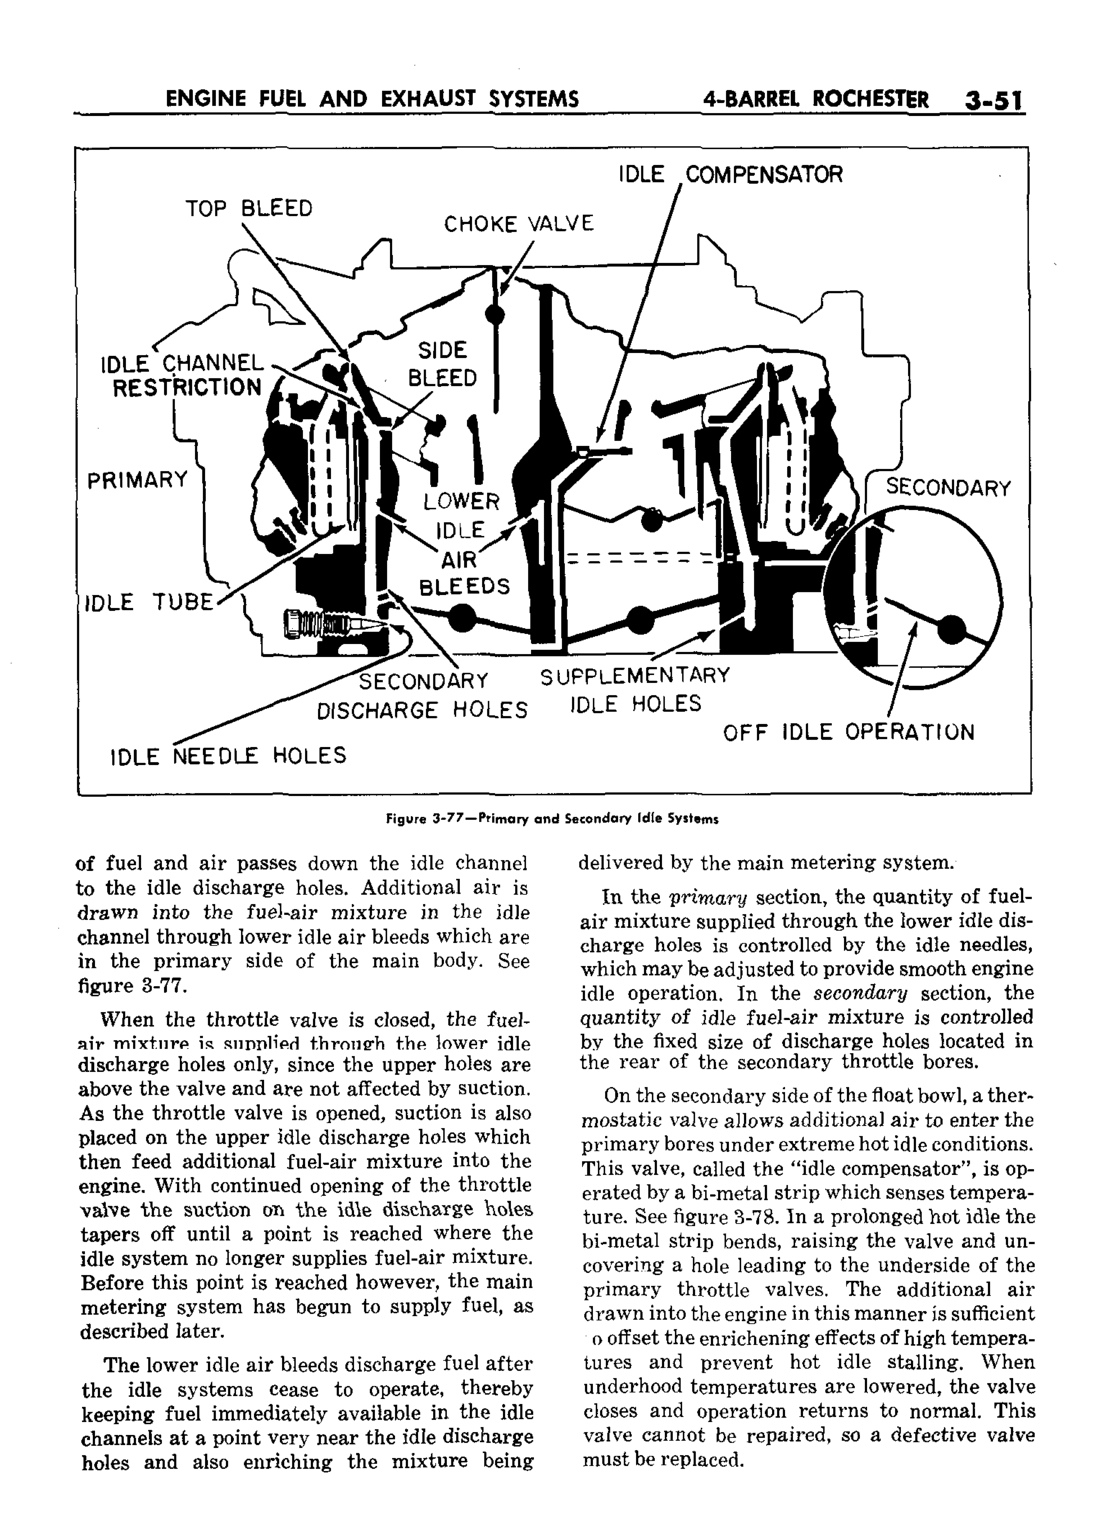 n_04 1959 Buick Shop Manual - Engine Fuel & Exhaust-051-051.jpg